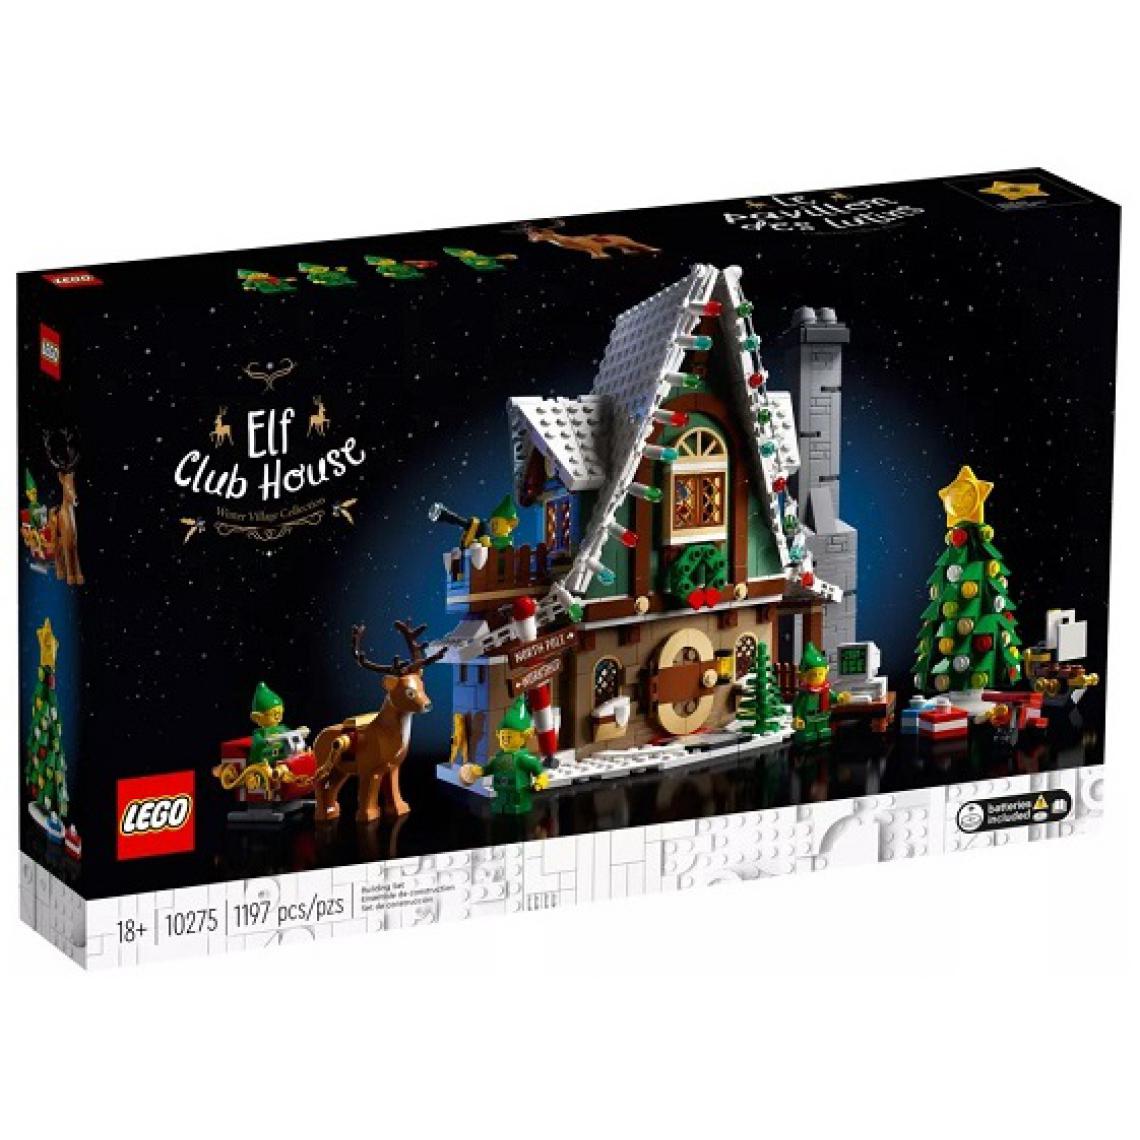 Lego - LEGO Seasonal Elf Clubhouse 10275 Ensemble de Maison - Briques Lego